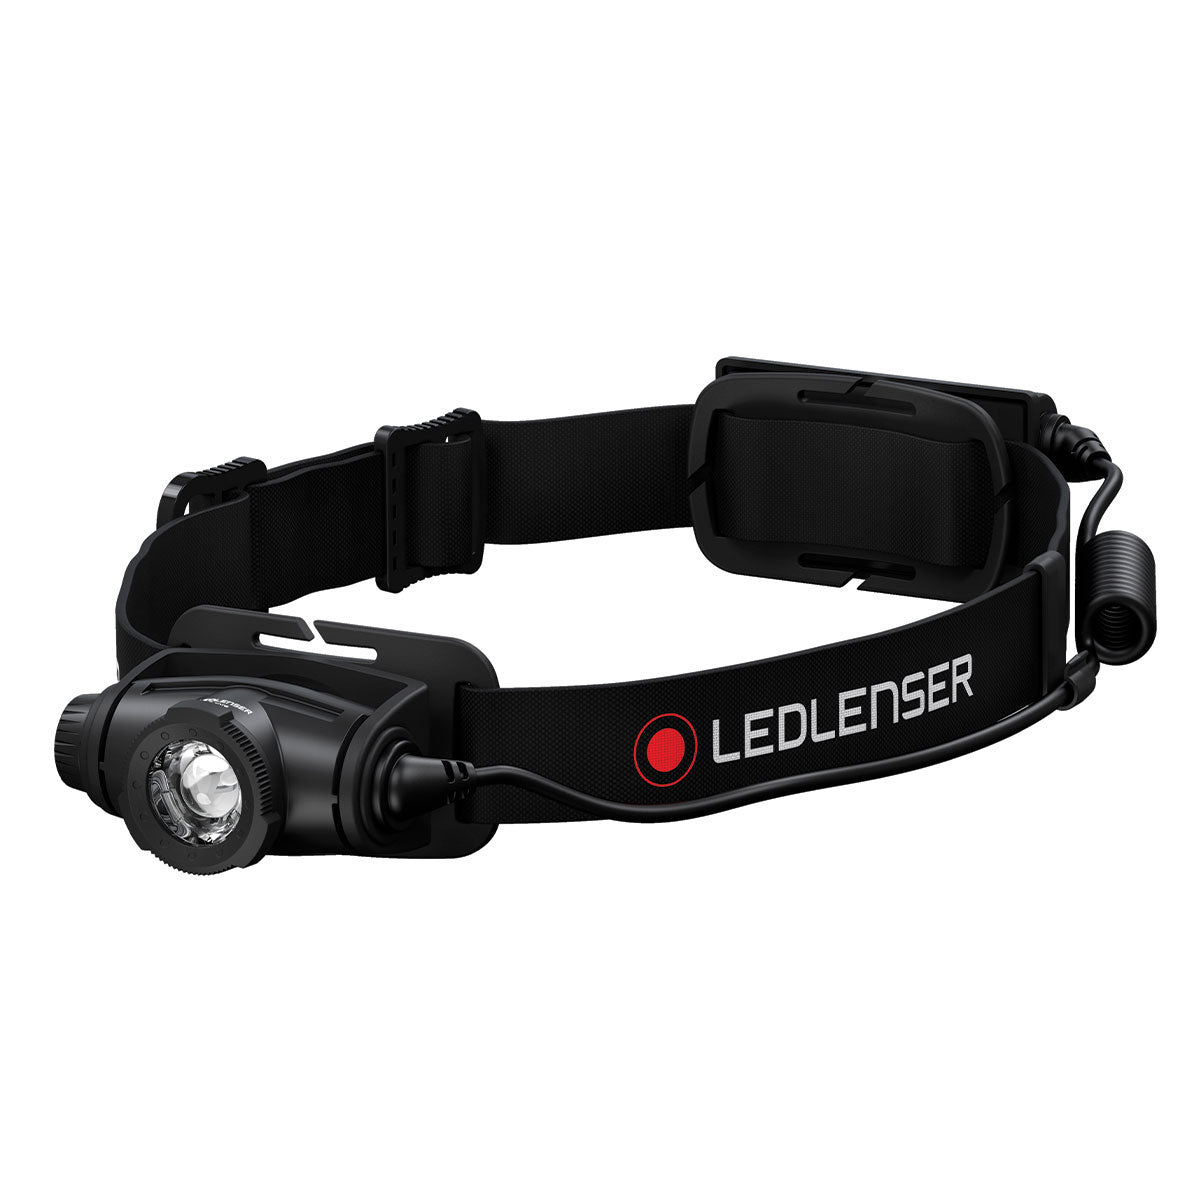 Light Headlamp, Rechargeable, H5R Core - ZL502121 by Ledlenser